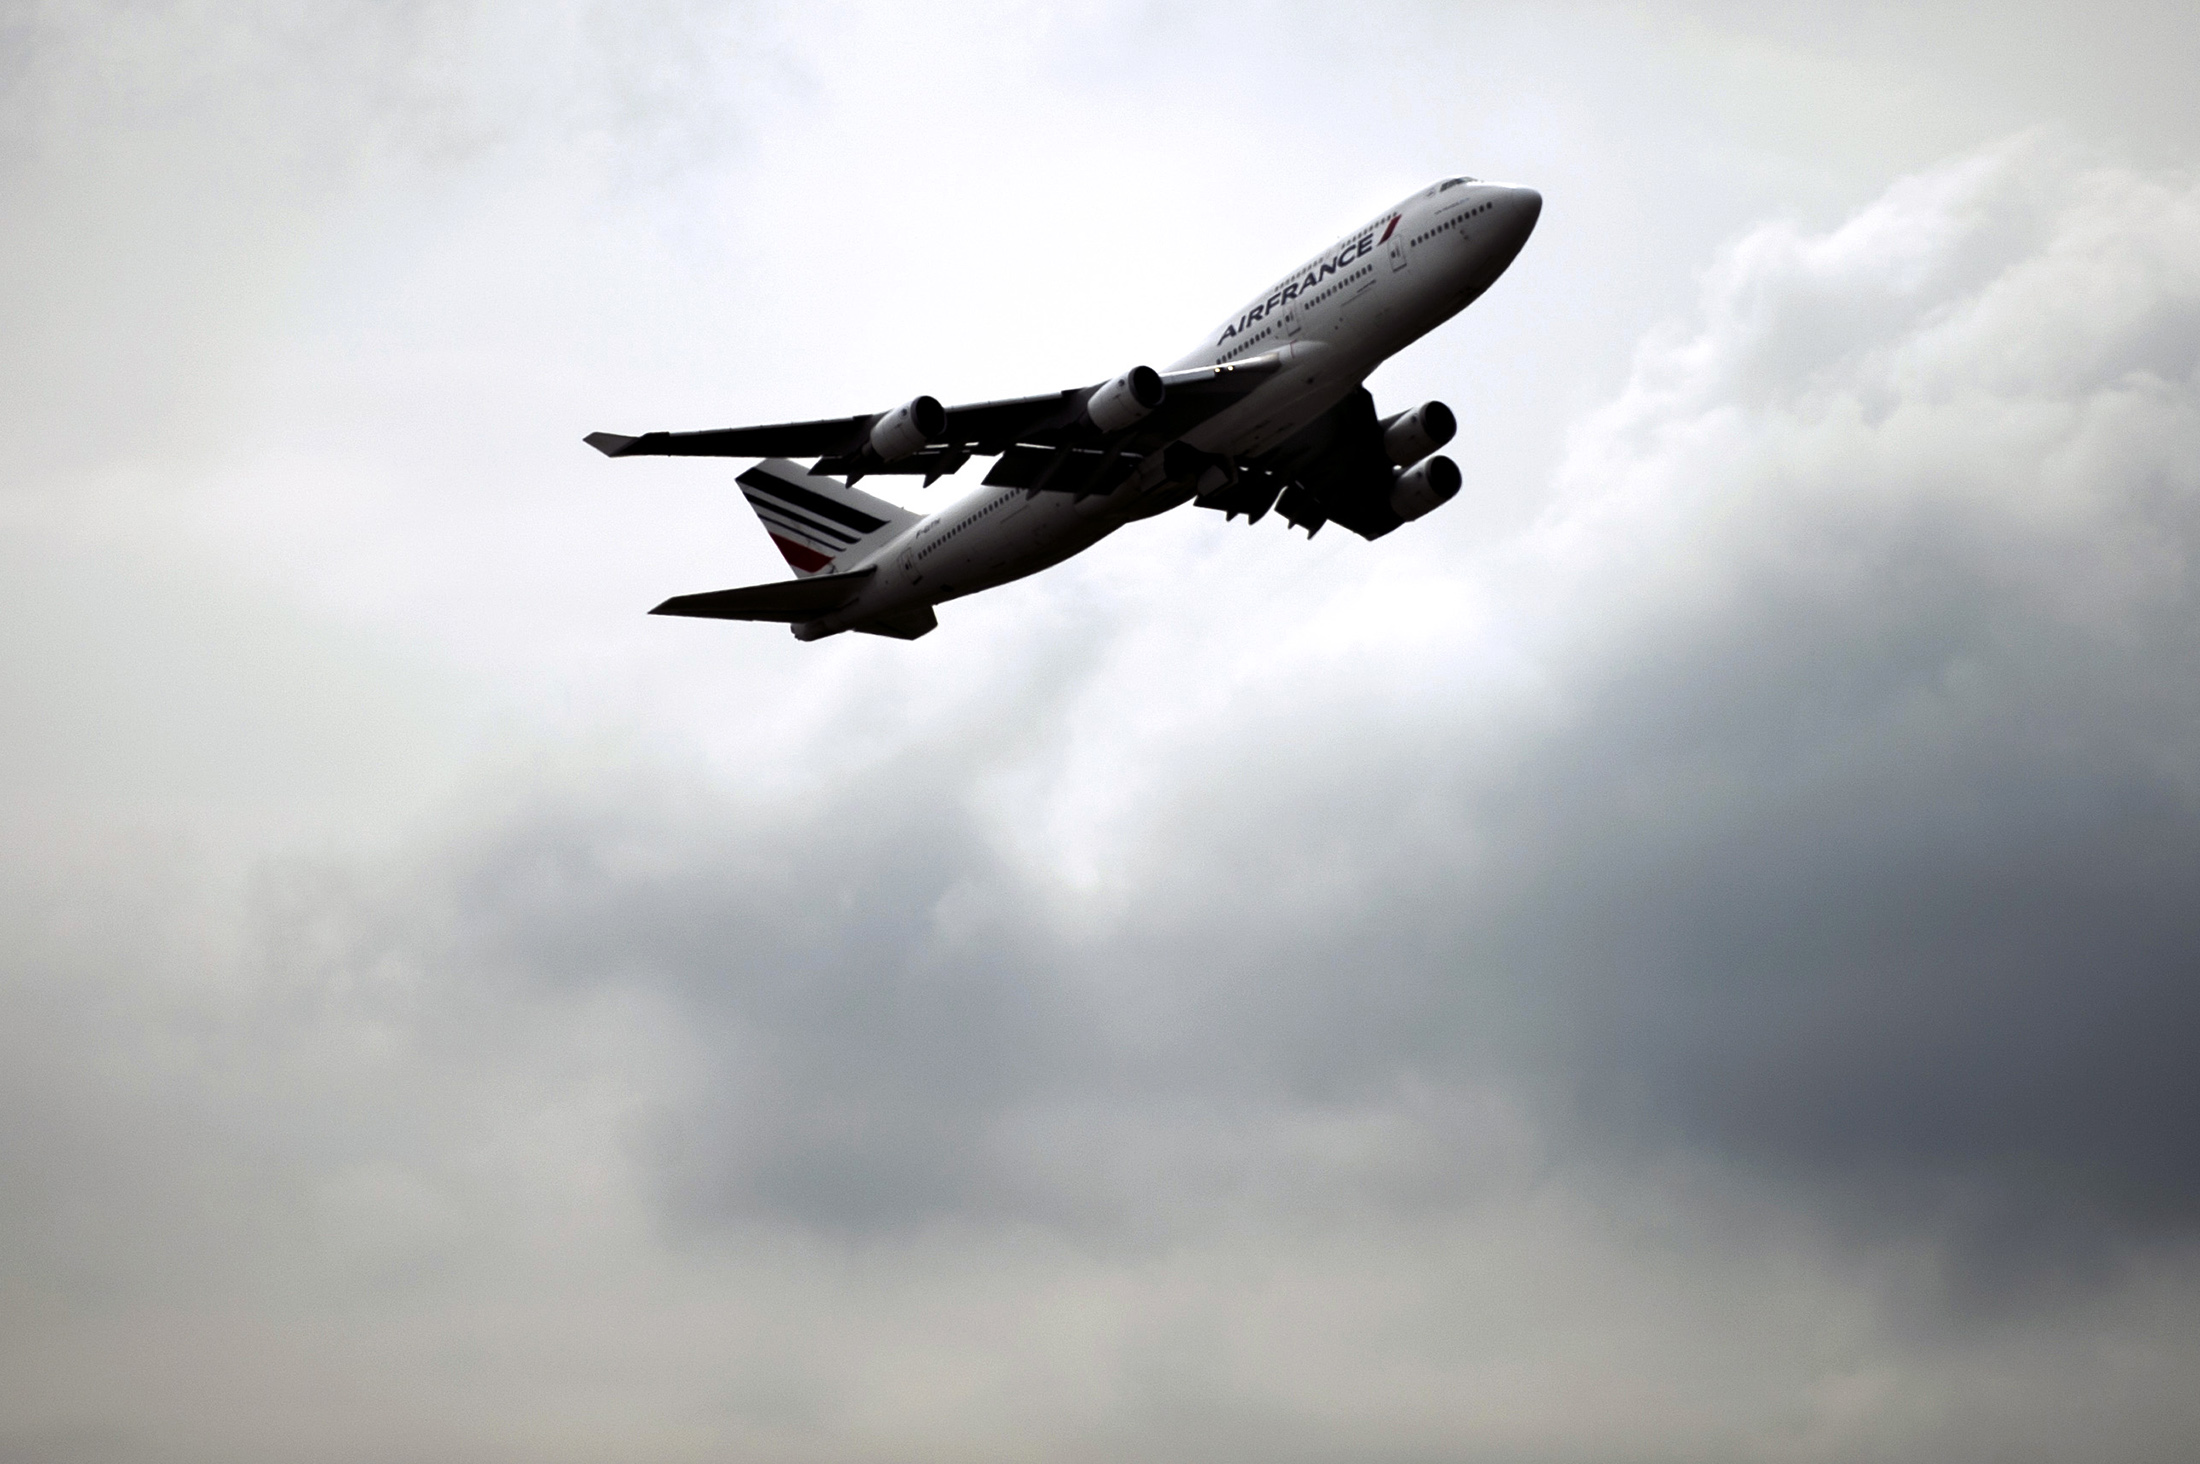 Air France retires Boeing 747s